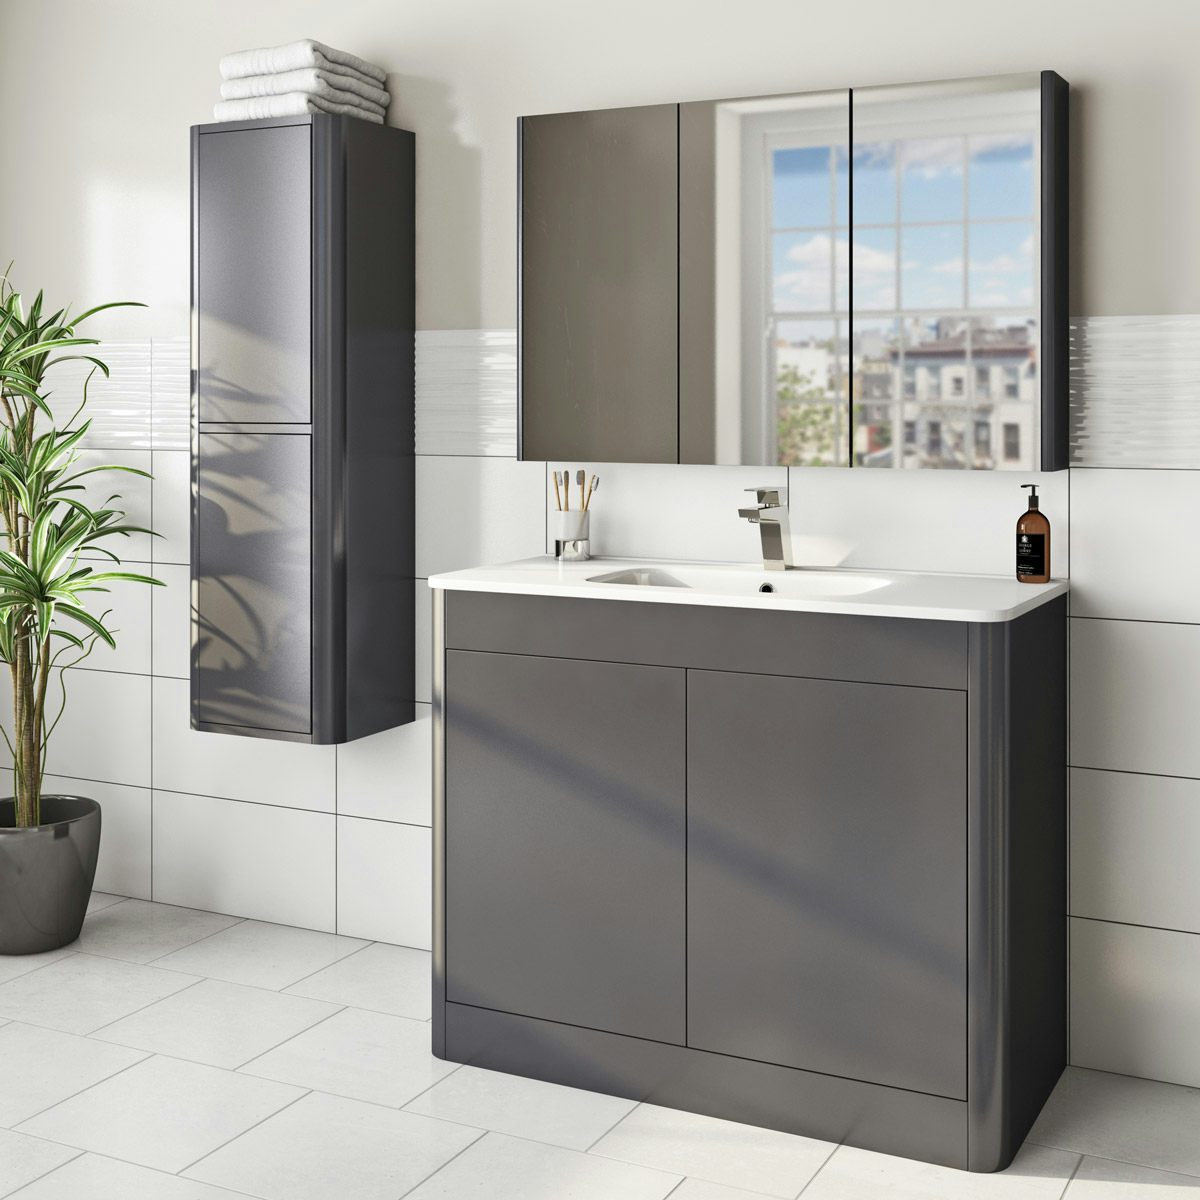 Mode Carter Slate Gloss Grey Furniture, Vanity Bathroom Units 1000mm